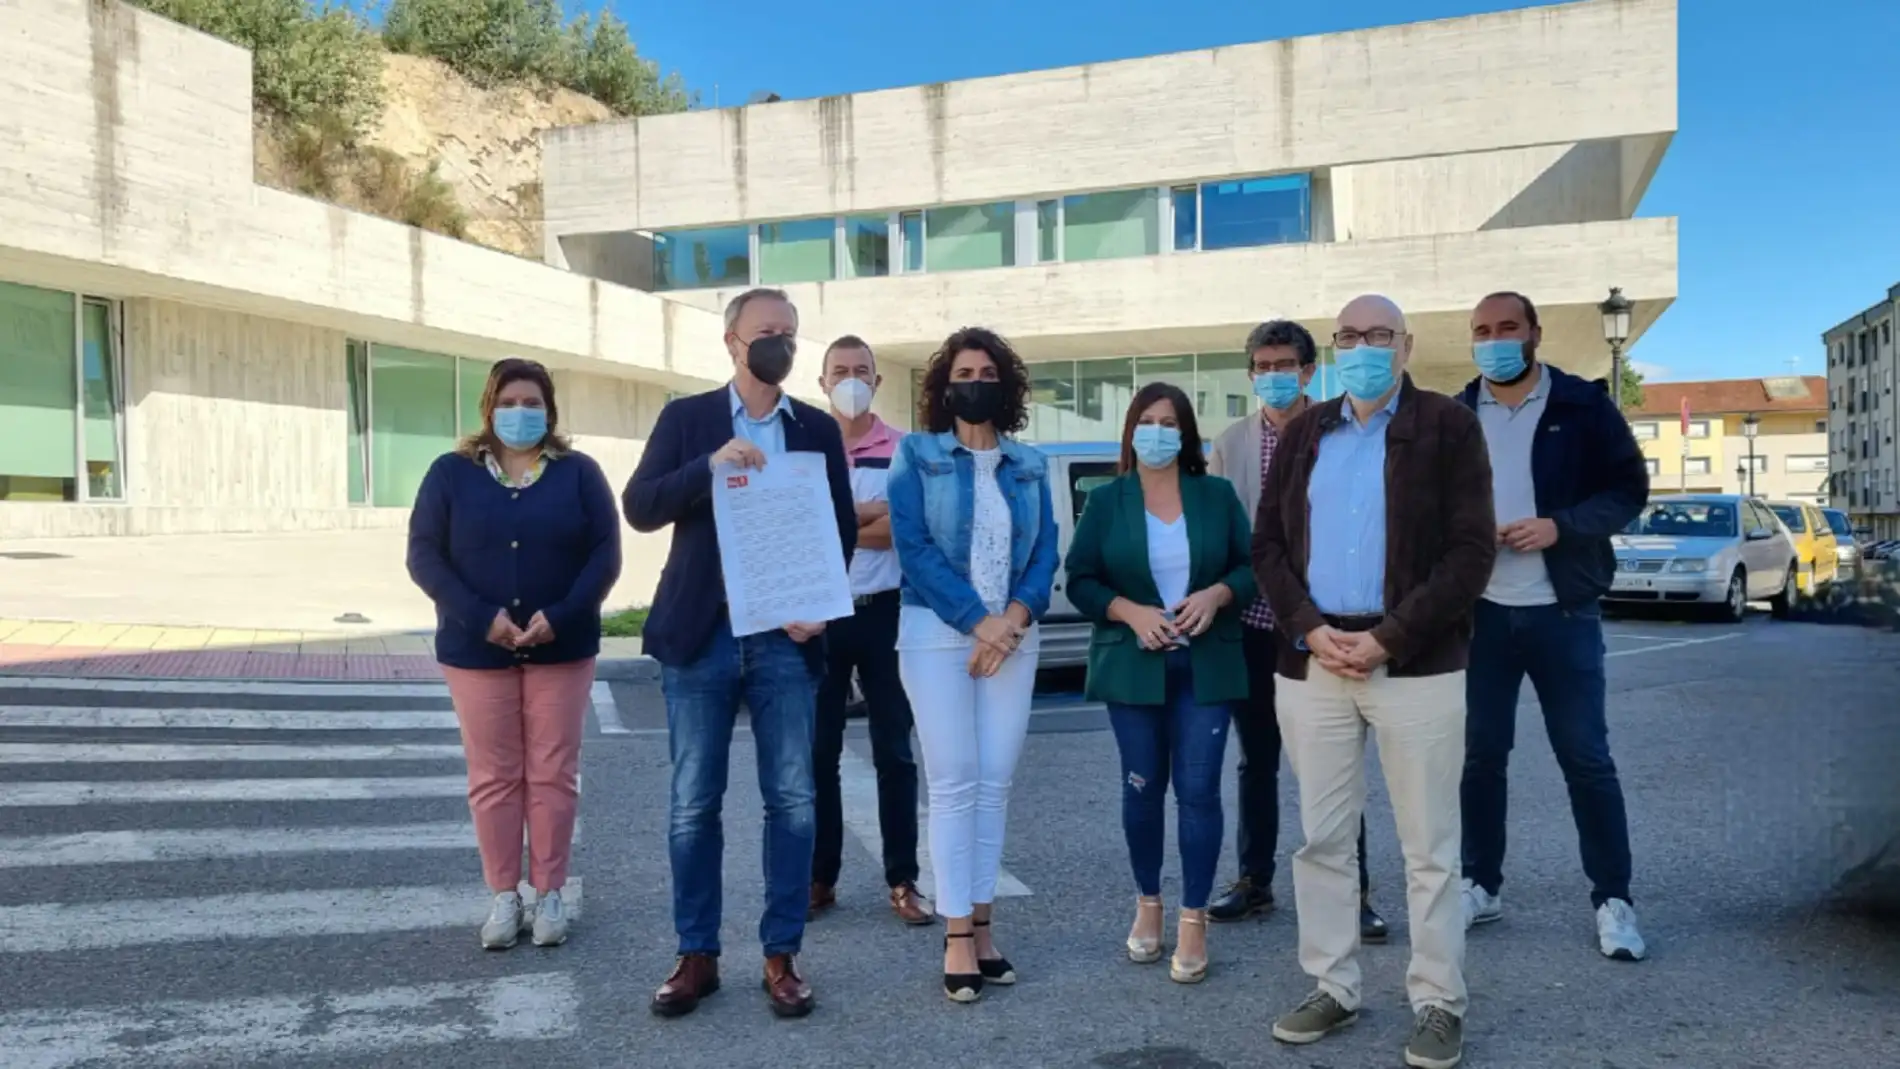 O Psoe reclama "reformular" a atención primaria en Ourense